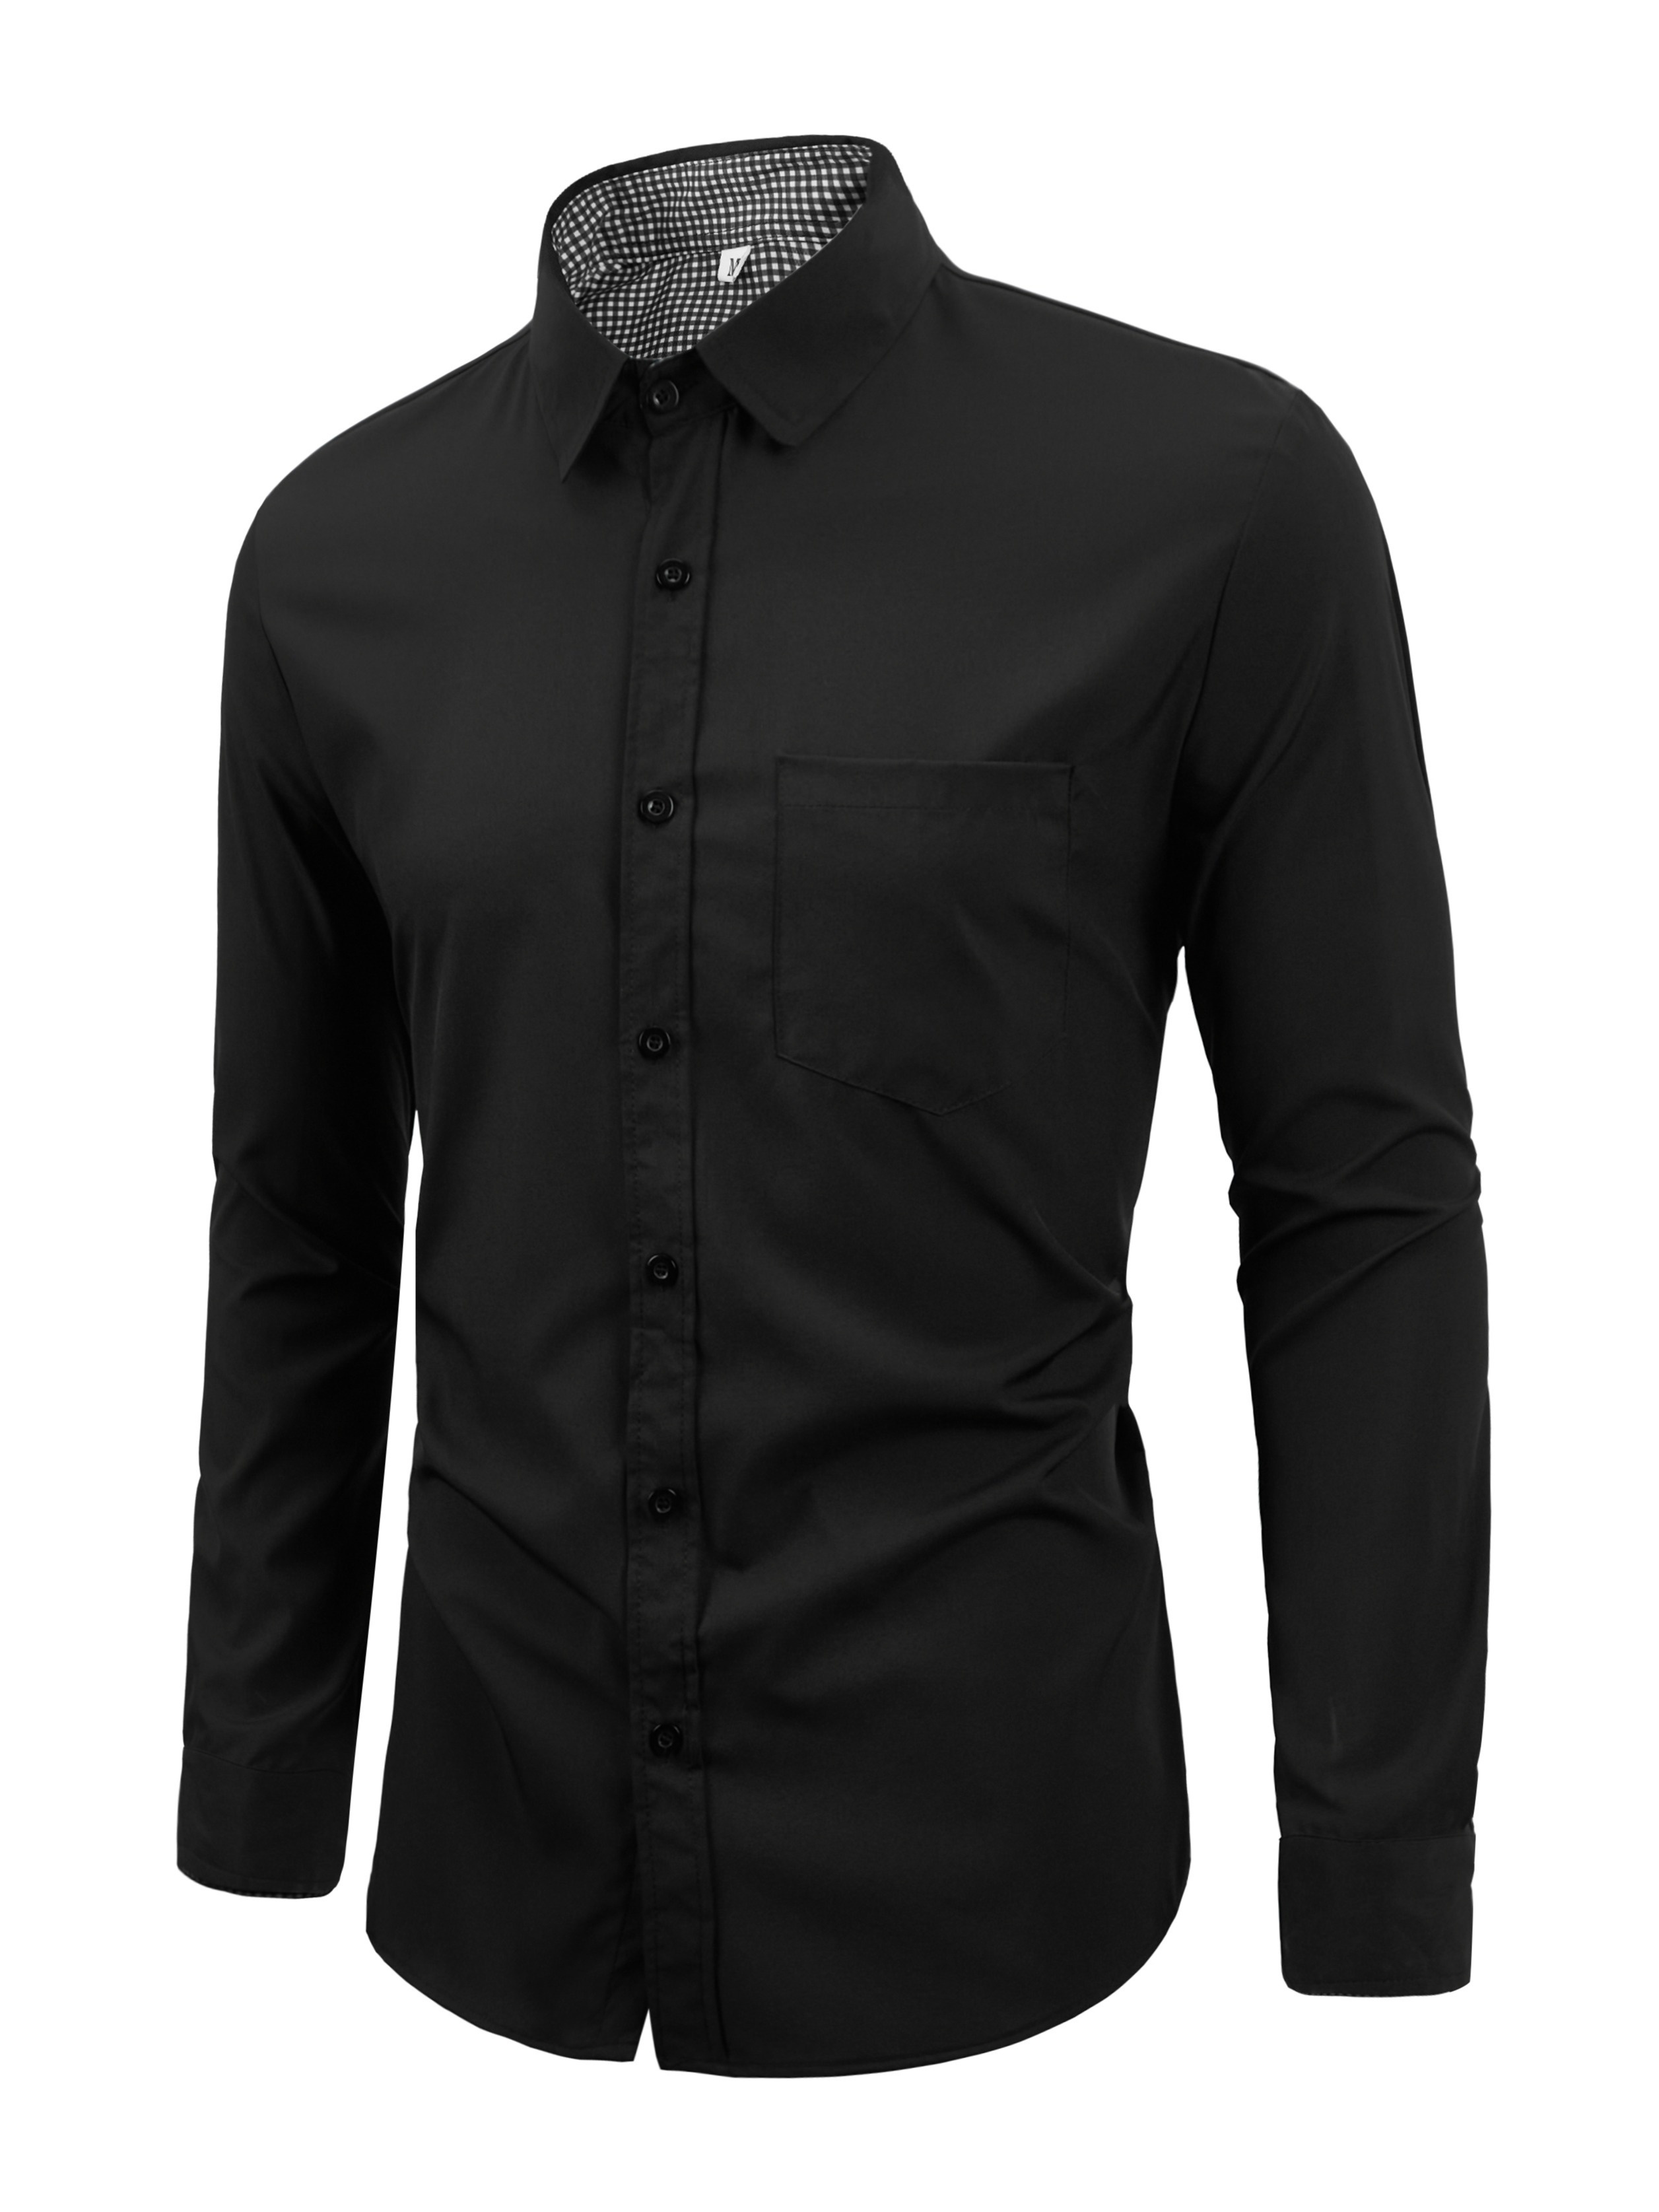 Camiseta Negra Para Hombre - Compra Online Camiseta .co